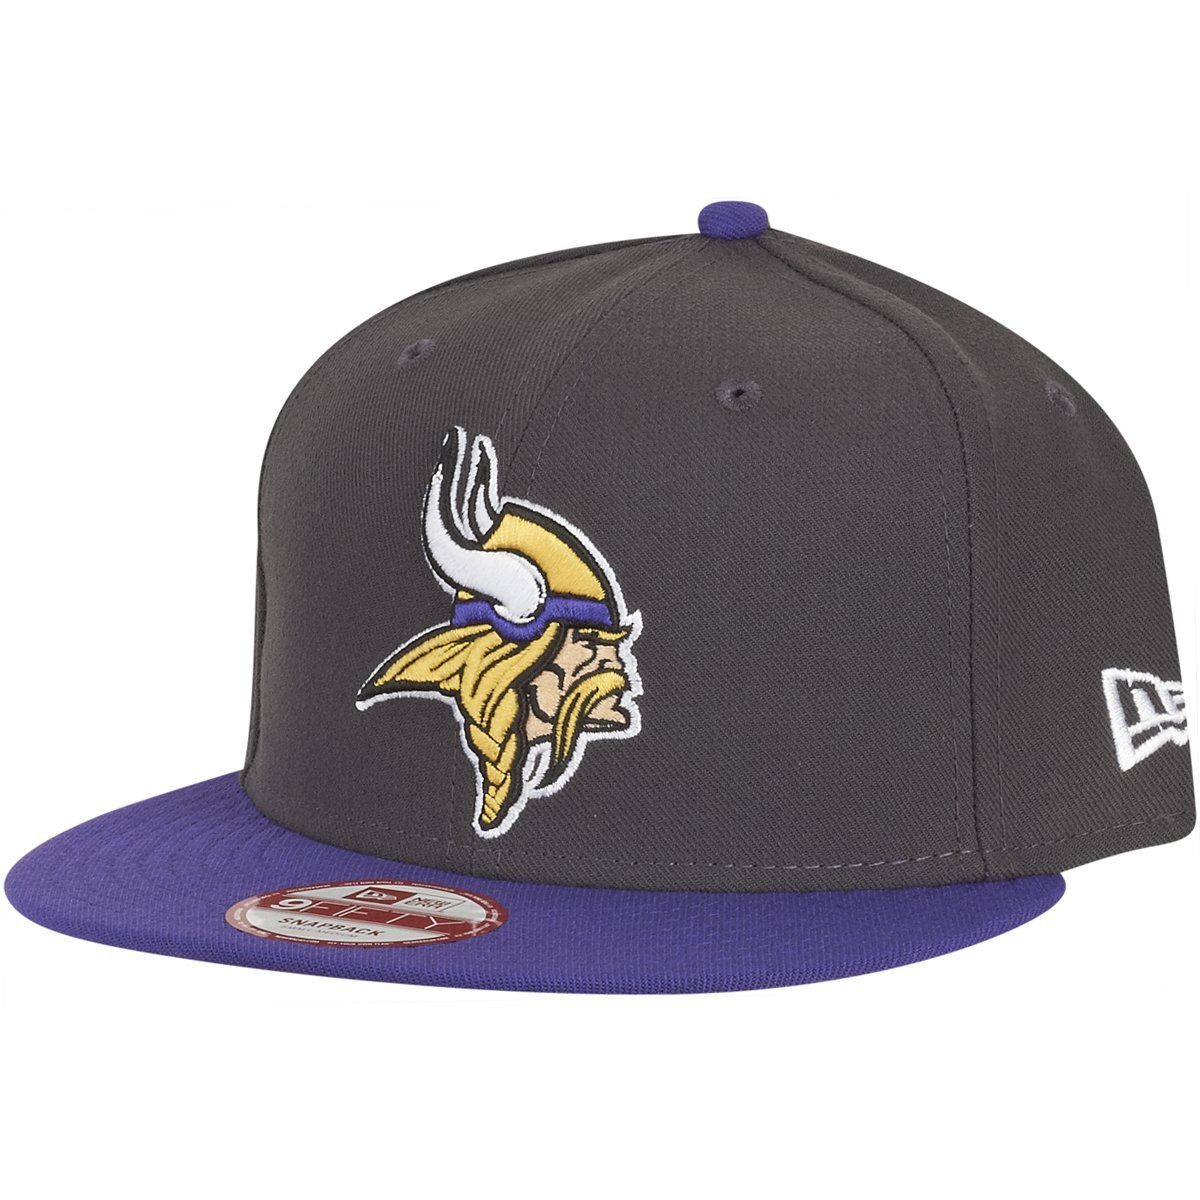 New Era Snapback Cap 9Fifty NFL Minnesota Vikings